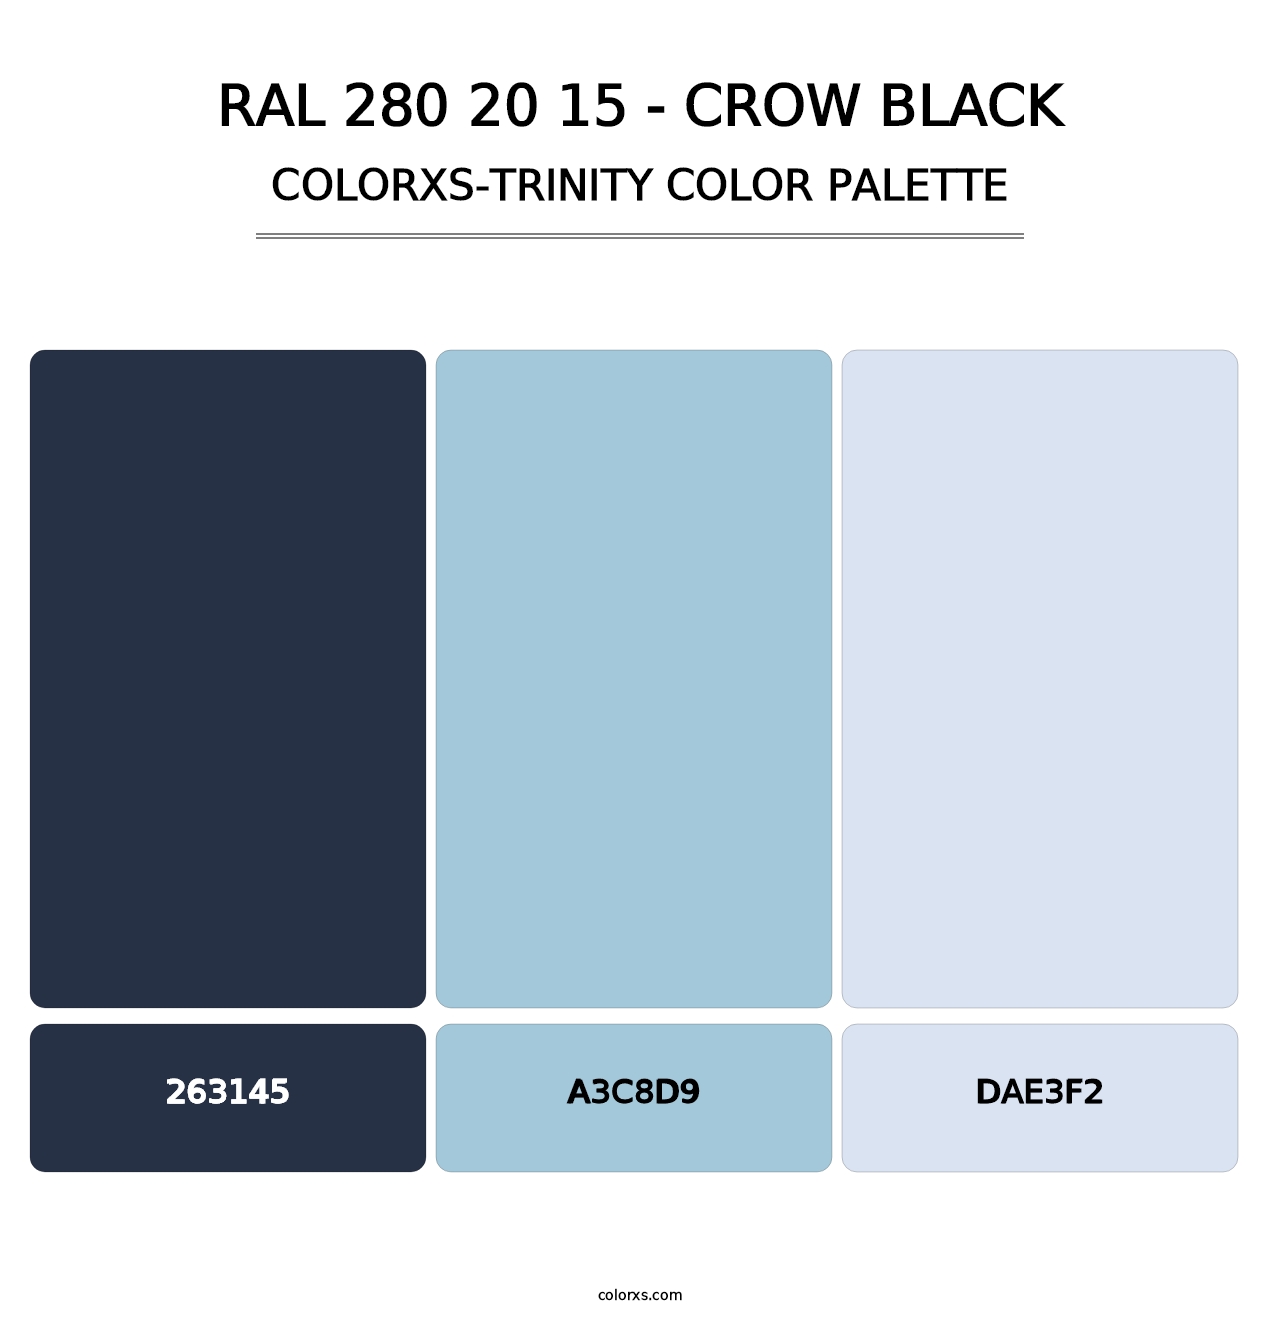 RAL 280 20 15 - Crow Black - Colorxs Trinity Palette